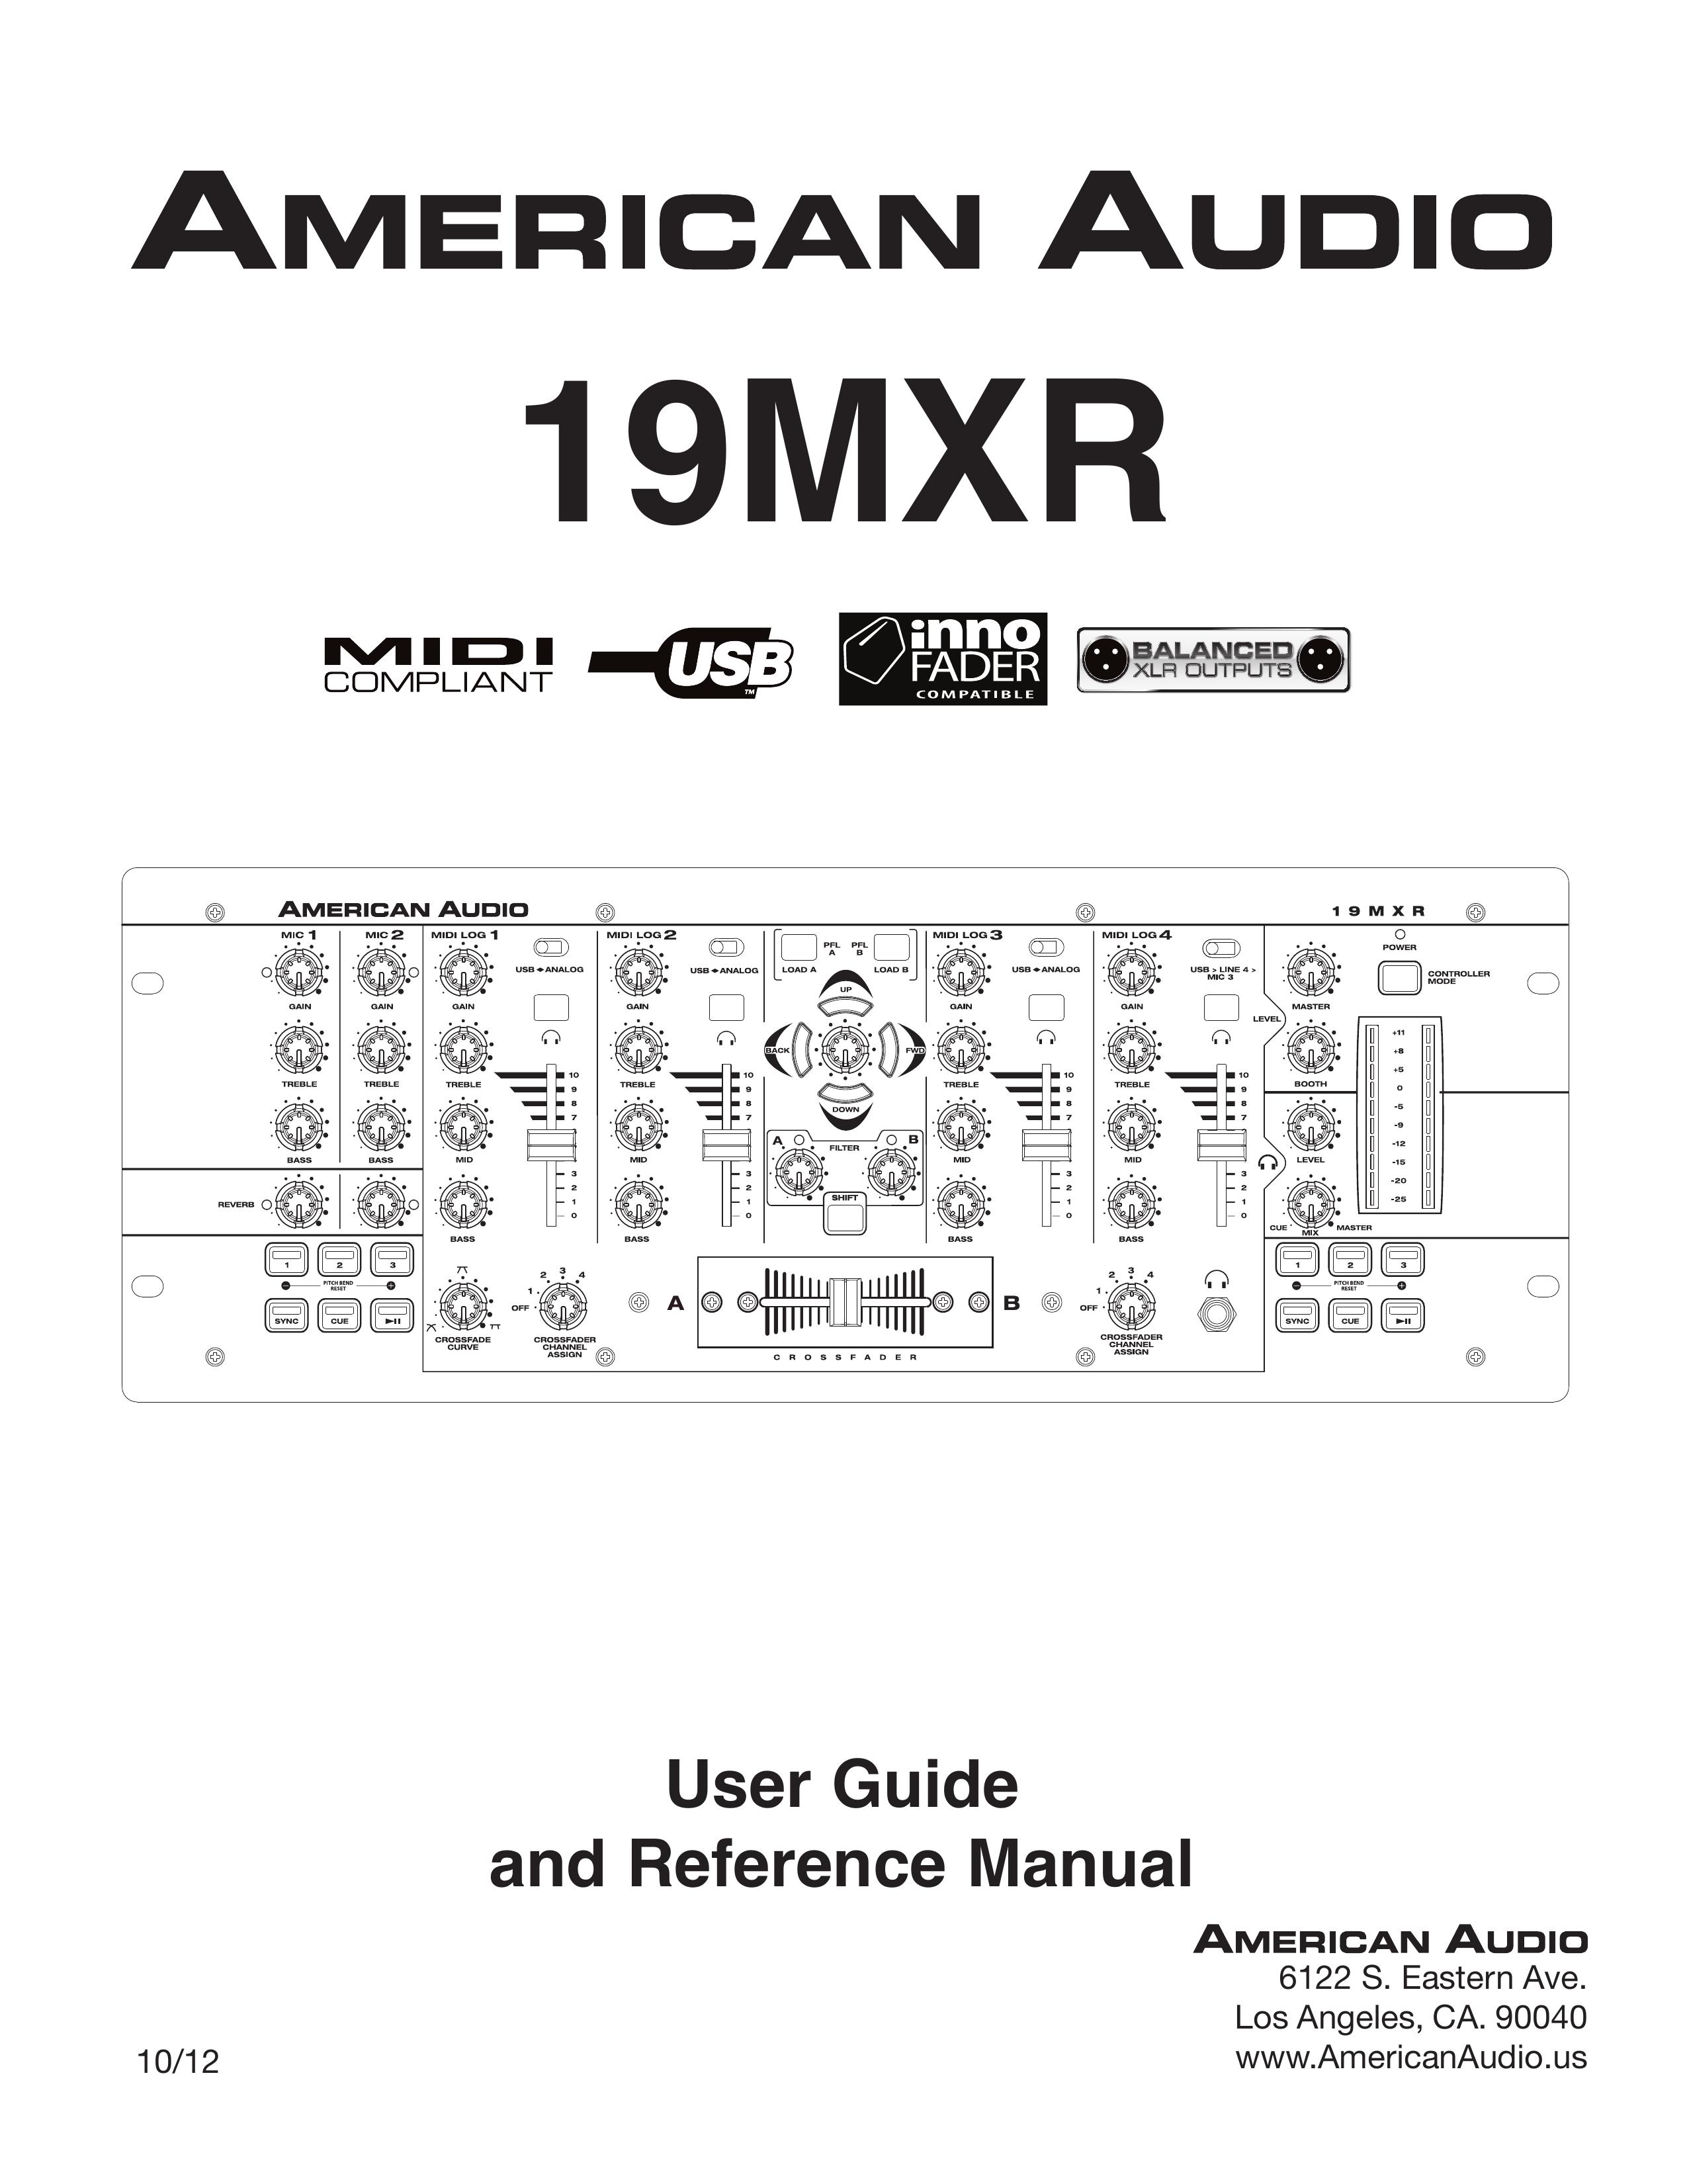 American Audio 19MXR Music Mixer User Manual